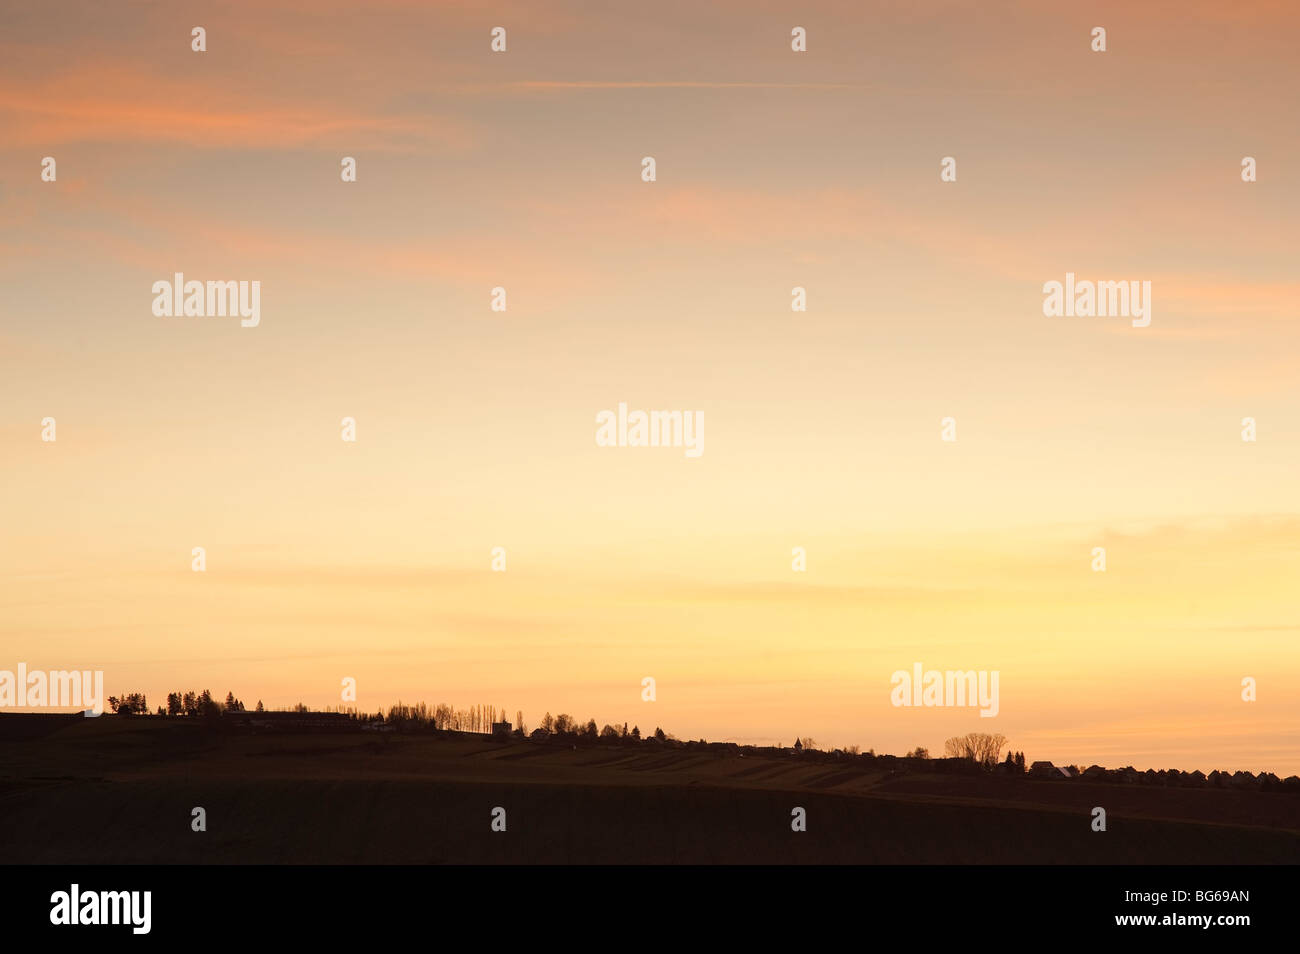 Morning horizon with a village silhouethe and yellow orange sky Stock Photo